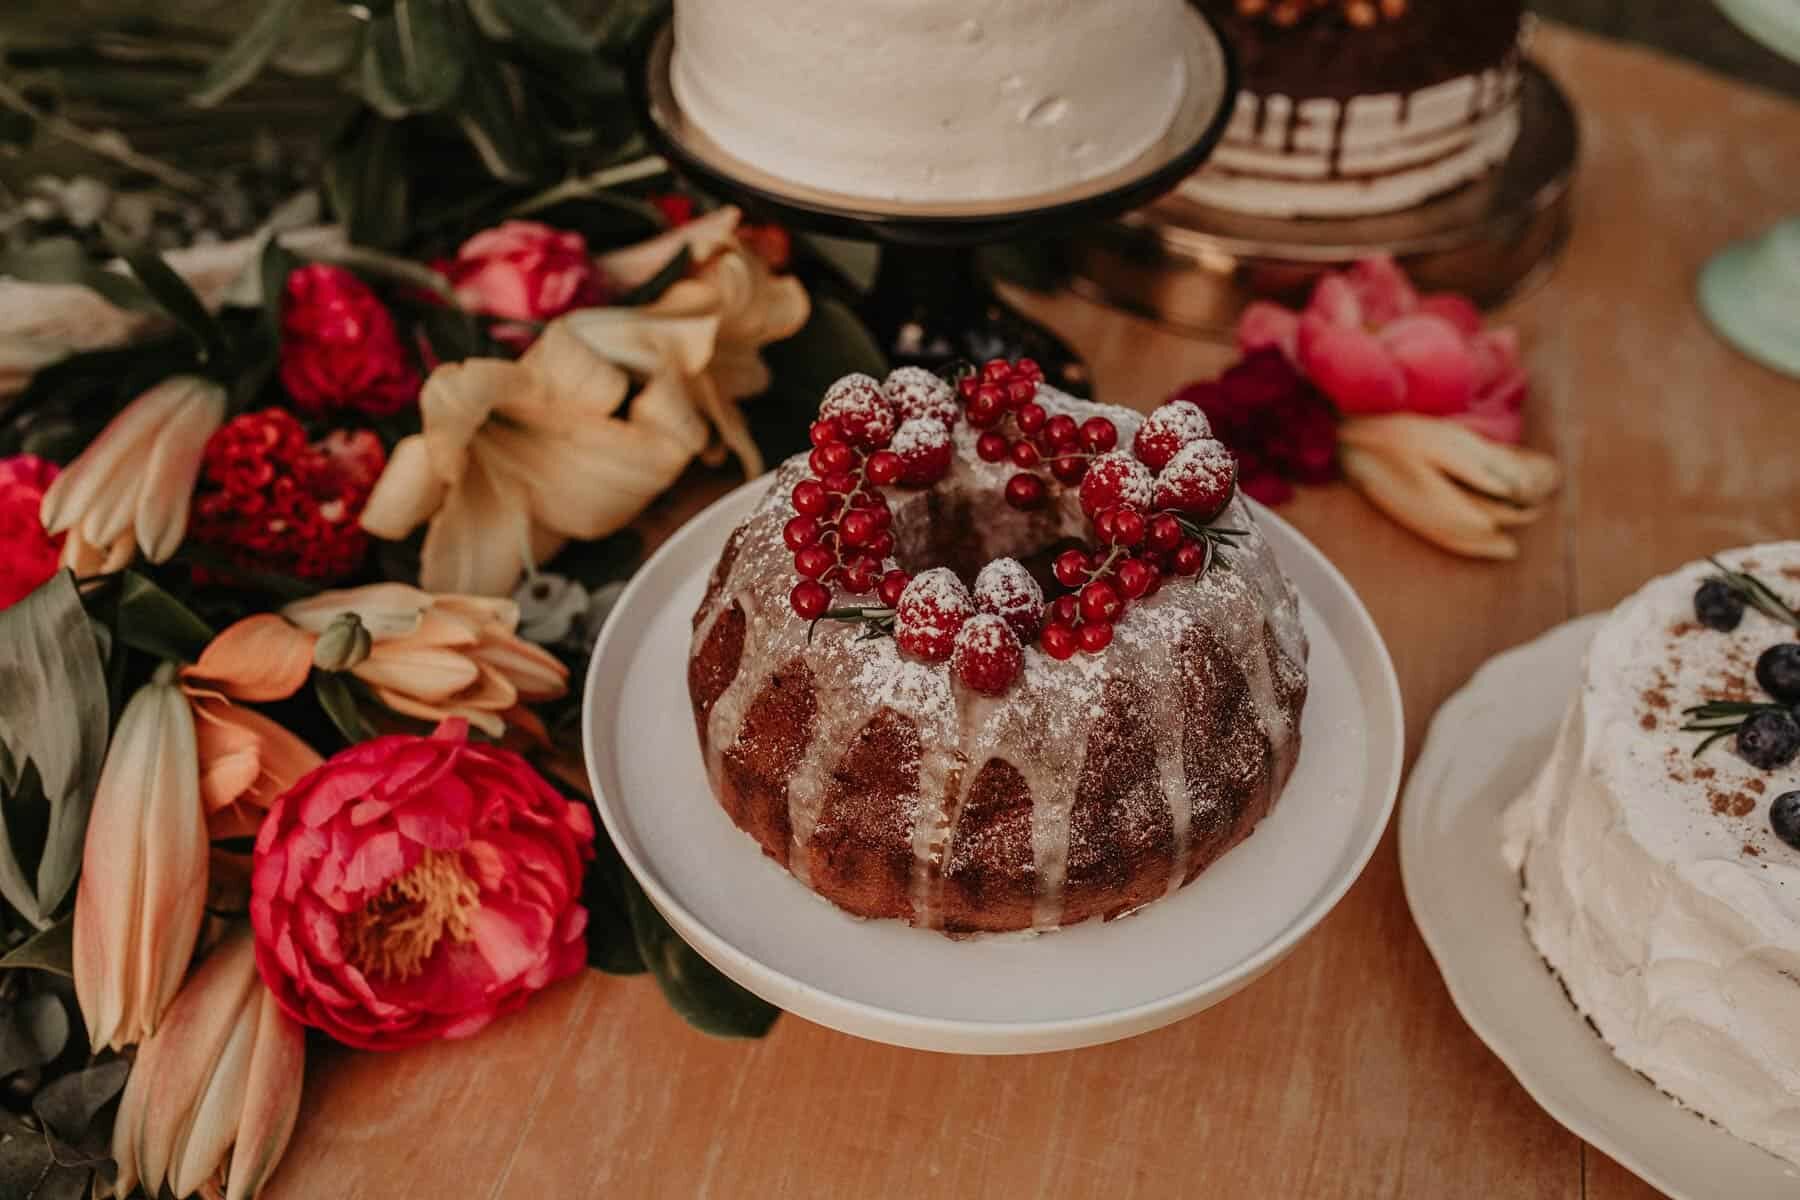 wedding cake dessert table